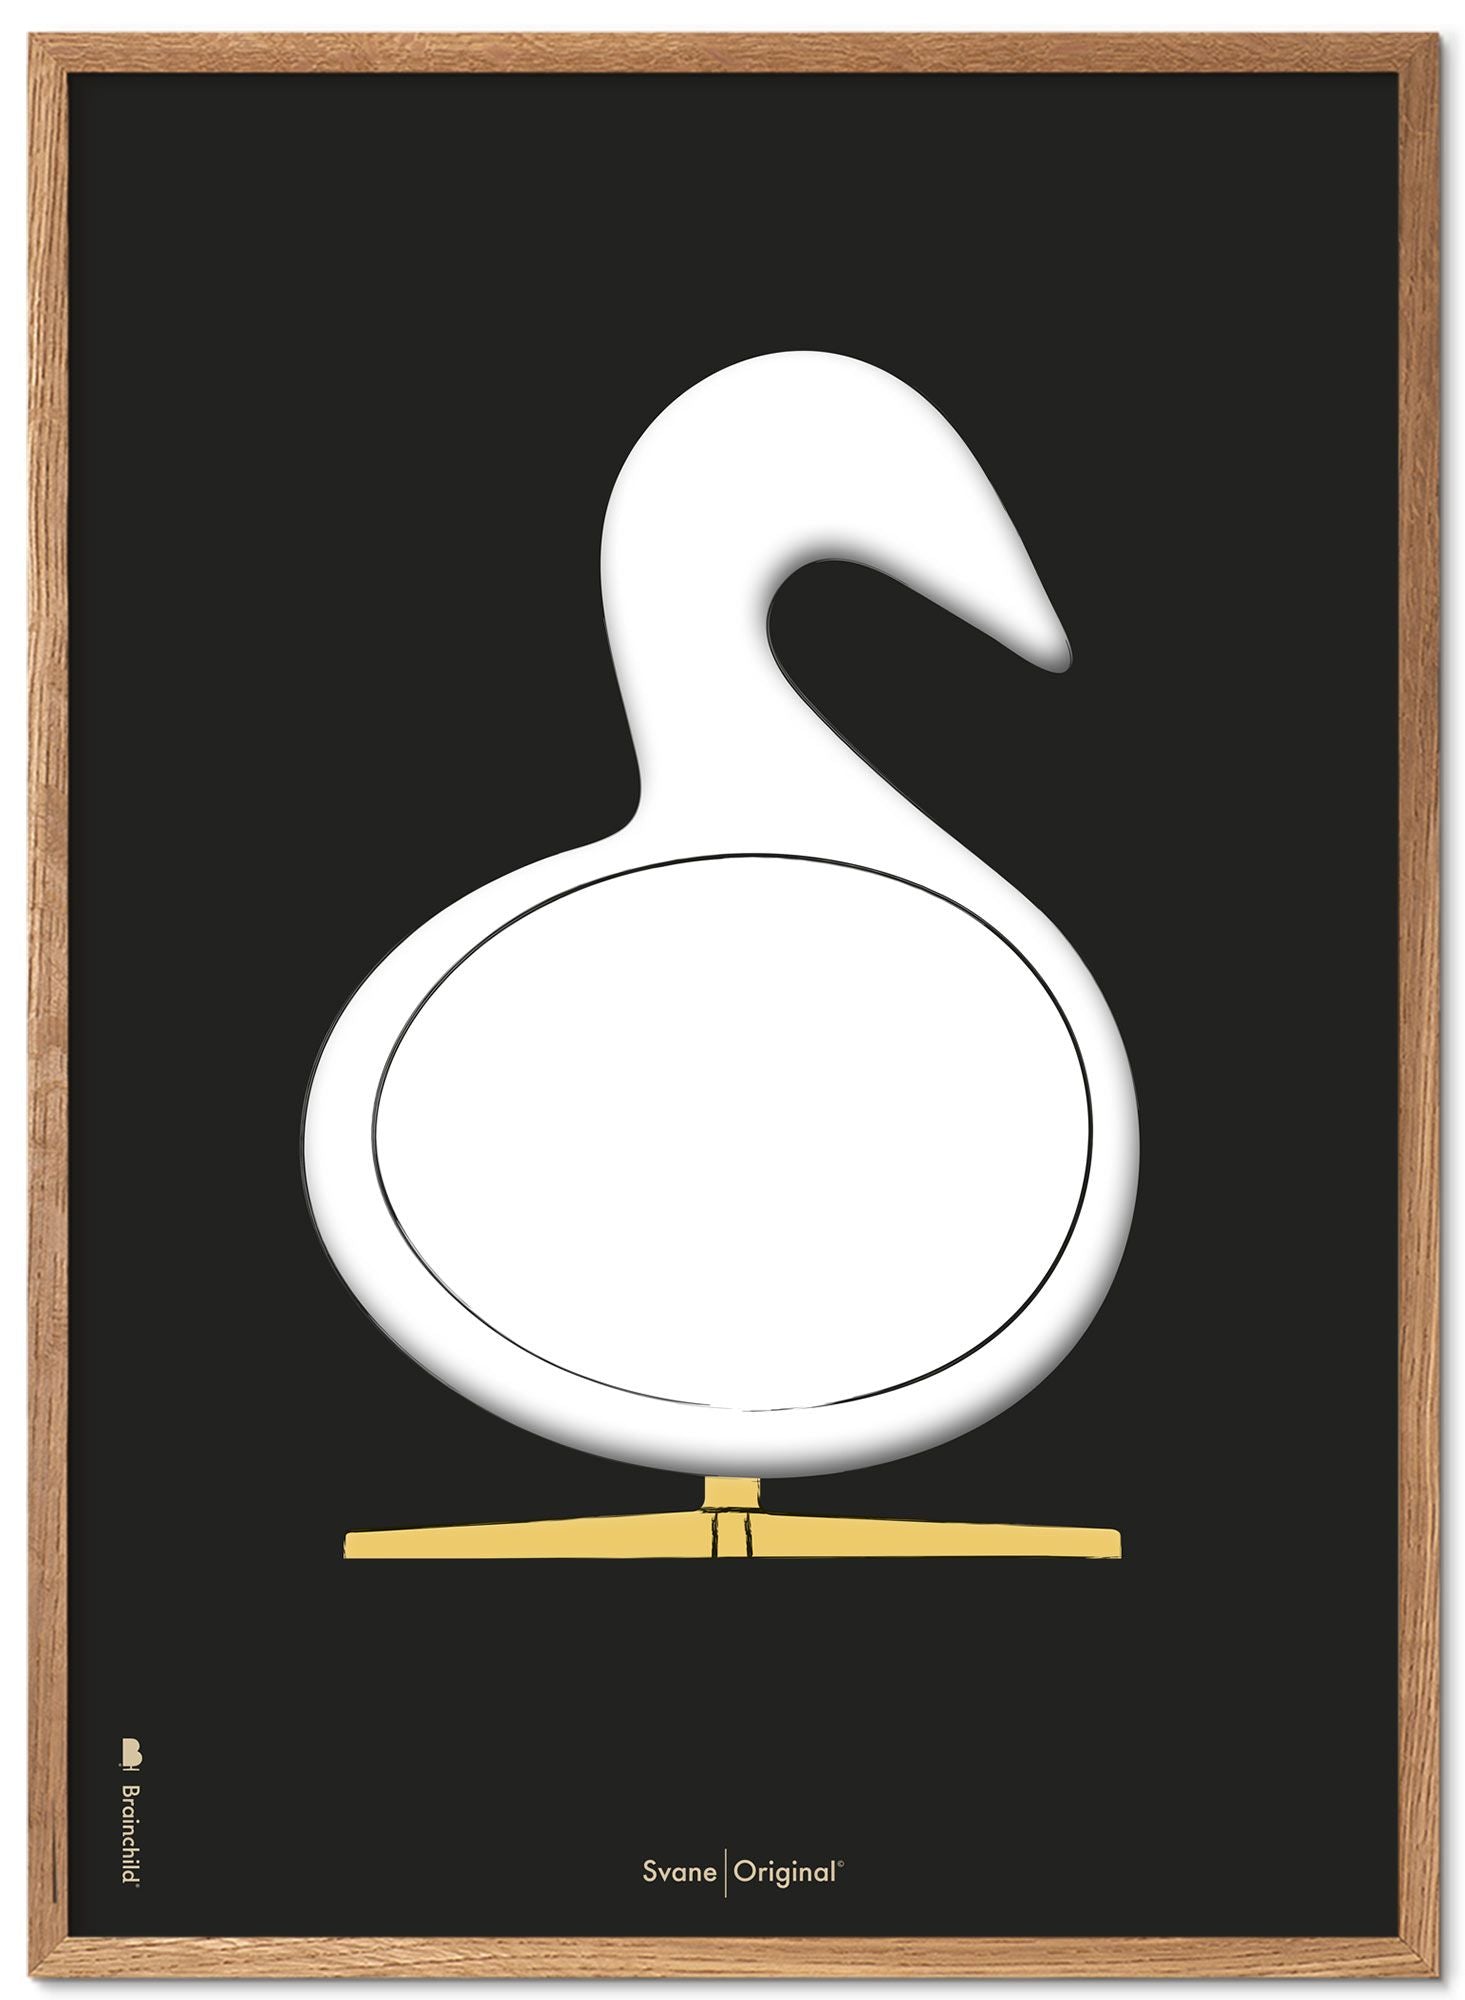 Brainchild Swan Design Sketch Poster Frame Made Of Light Wood 30x40 Cm, Black Background